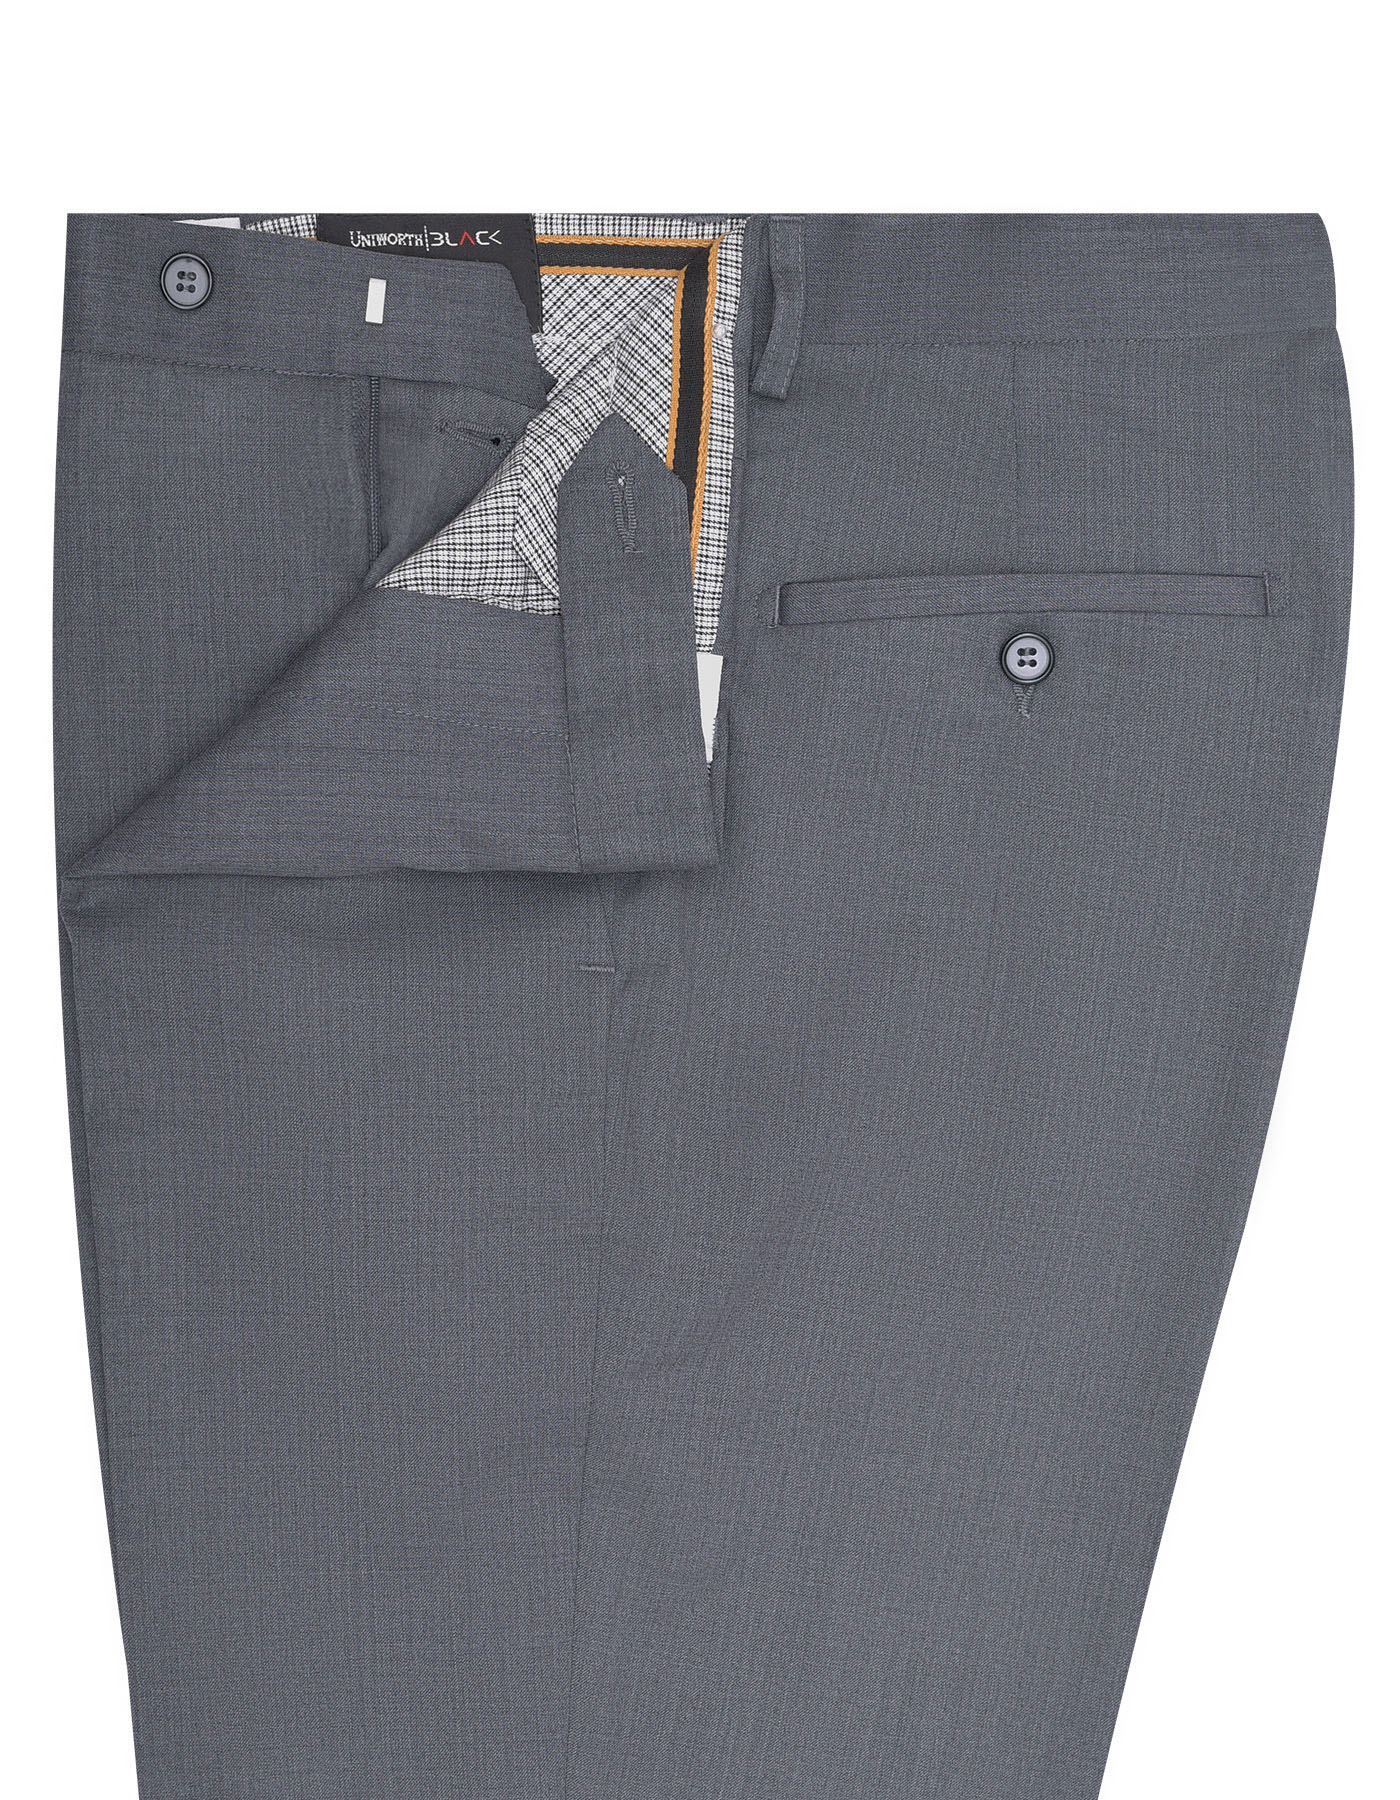 Buy Men Grey Formal Trouser Online Shopping In Pakistan | Uniworth